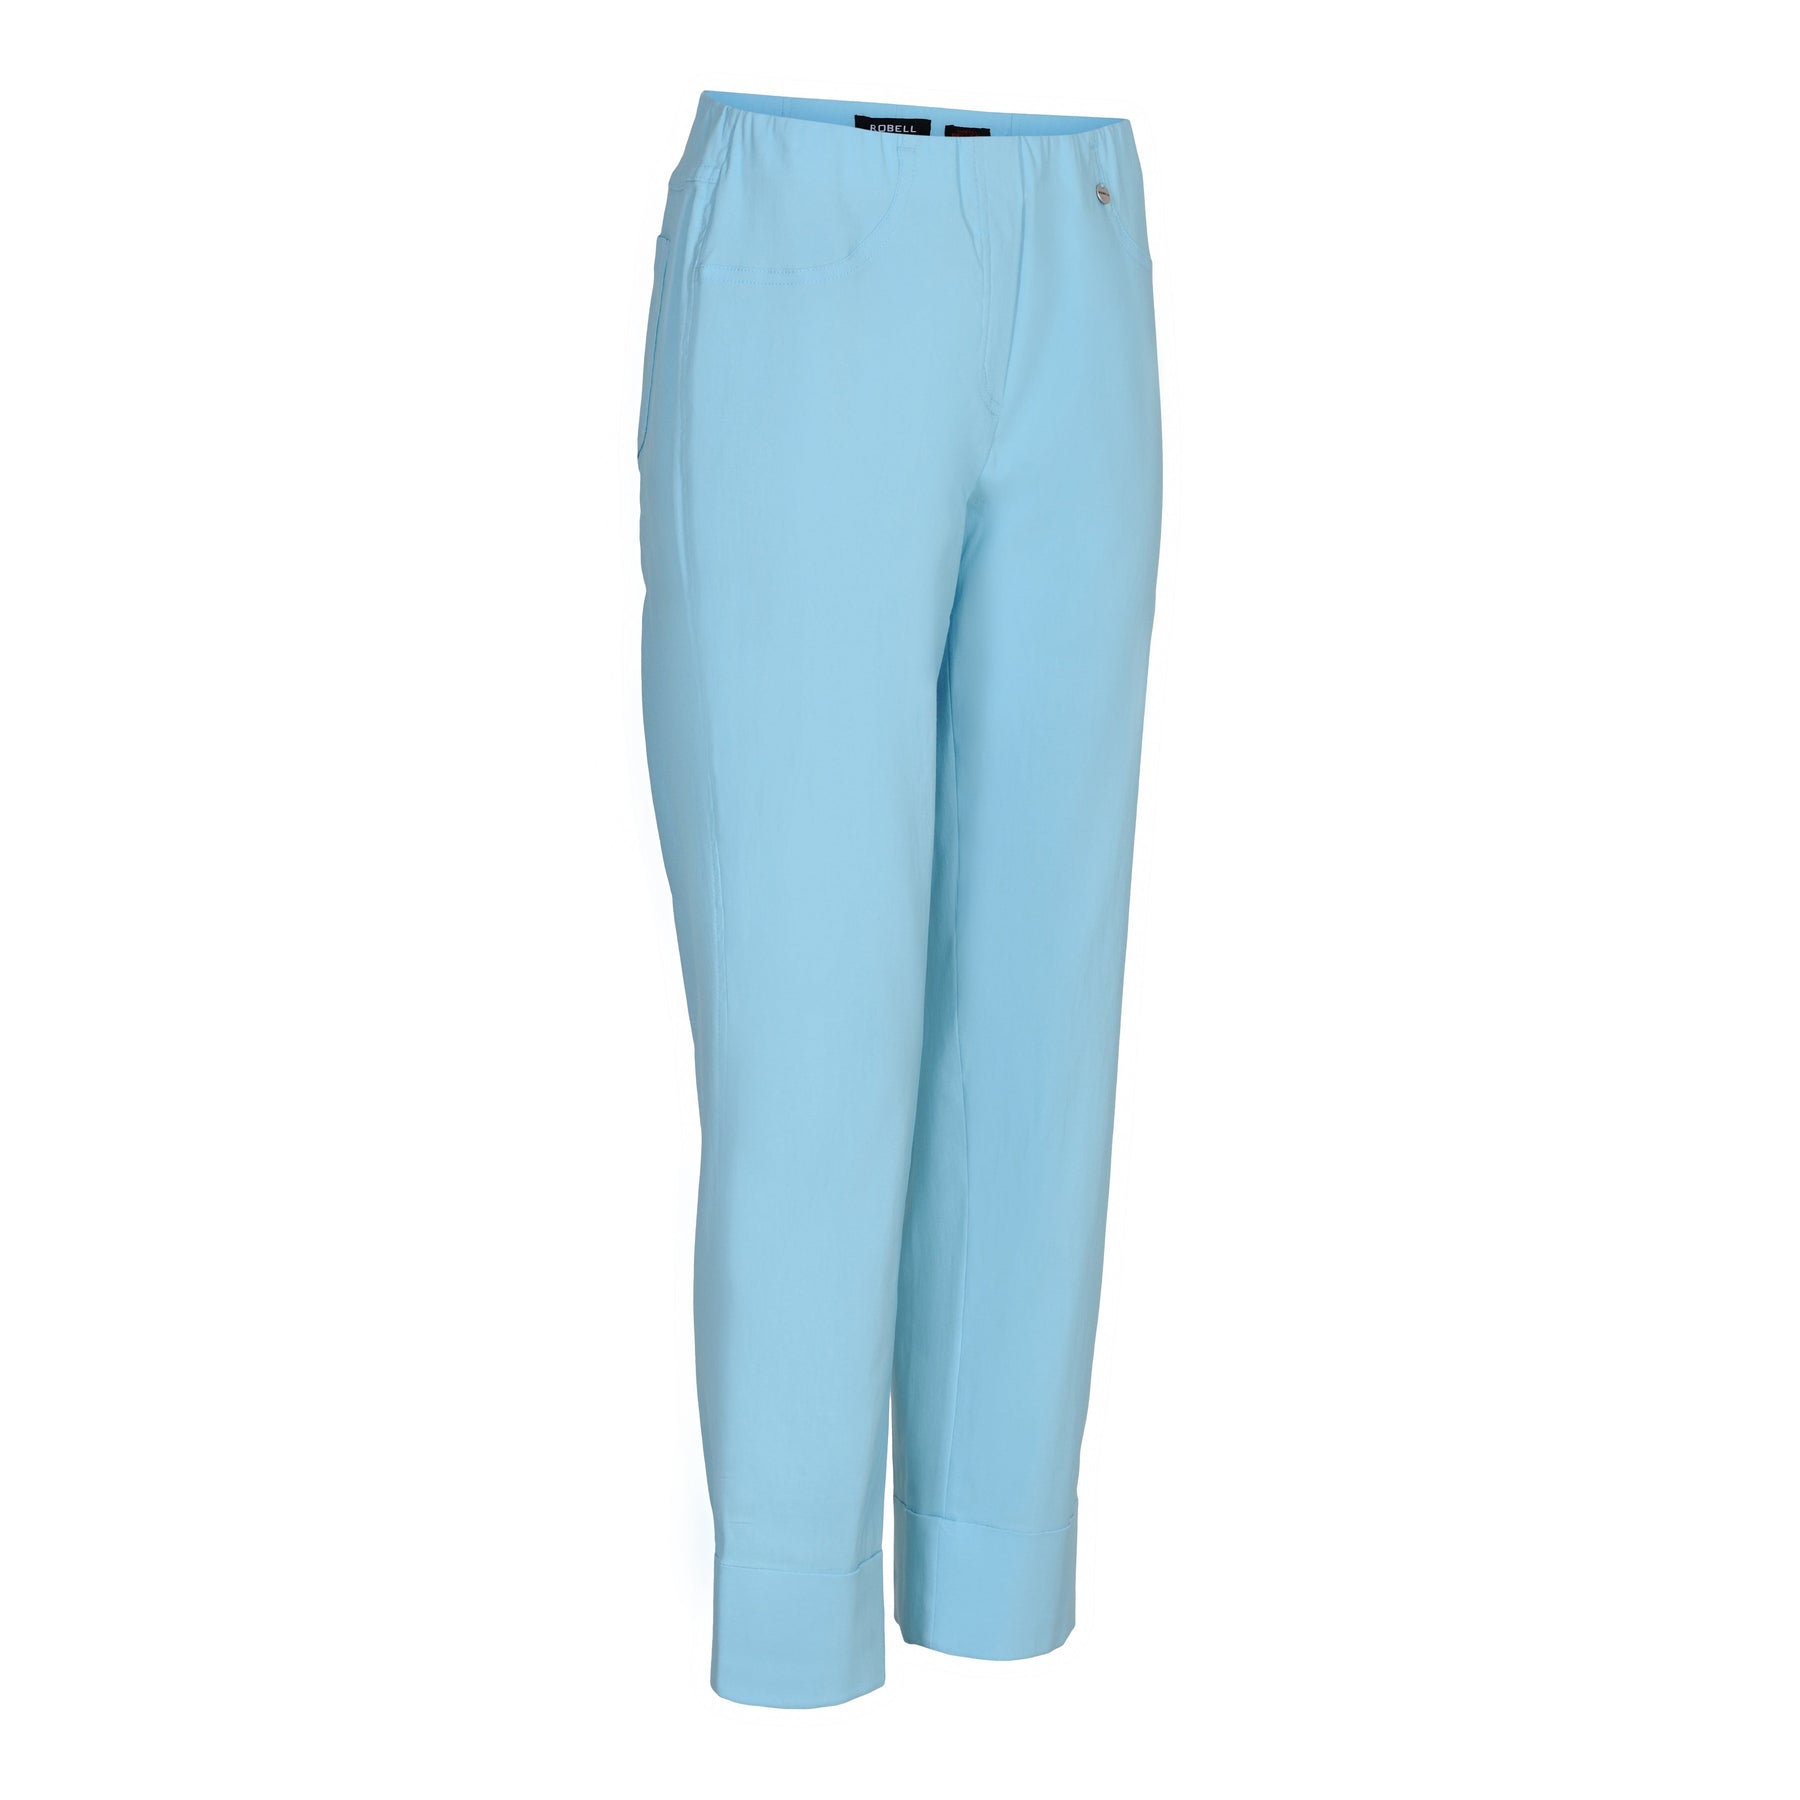 Robell 7/8ths Trousers in Aqua Blue